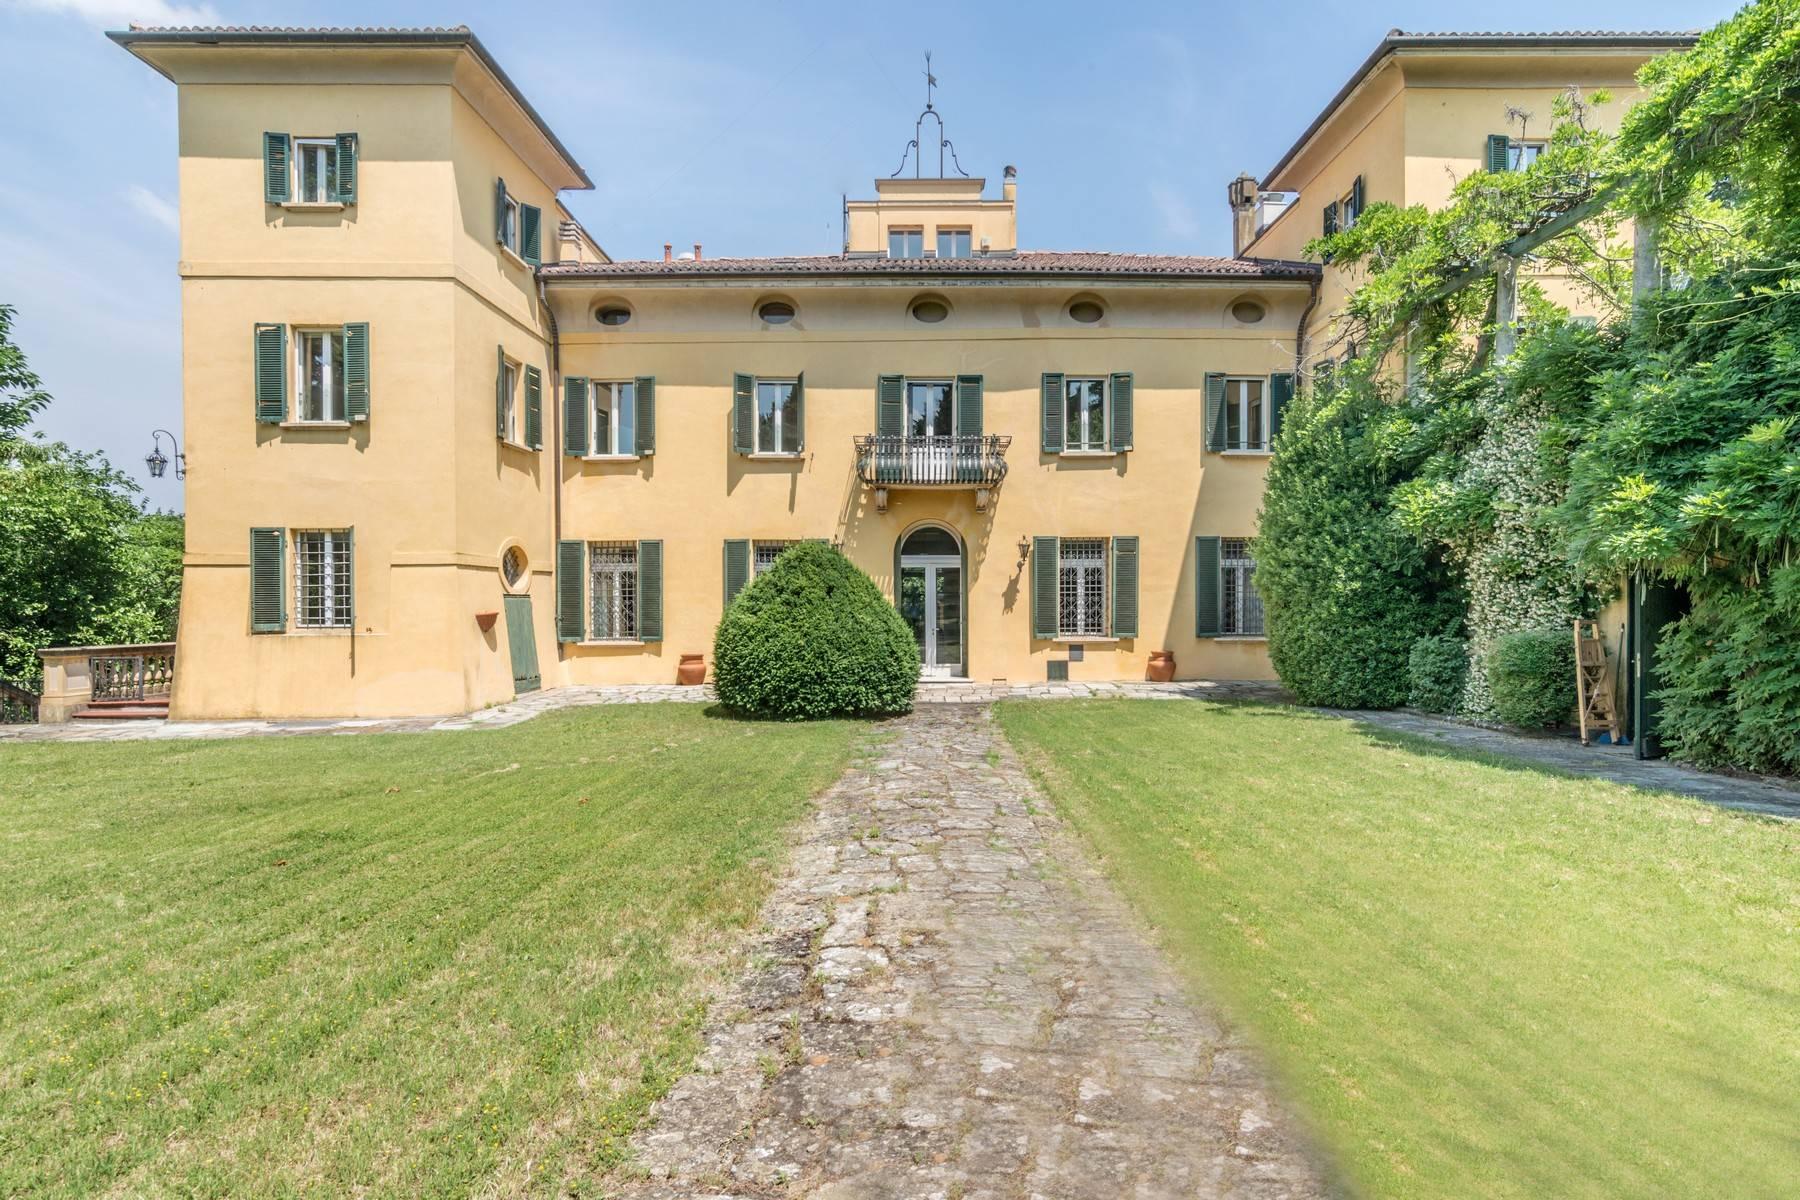 Splendid villa near the historic center of Bologna - 1